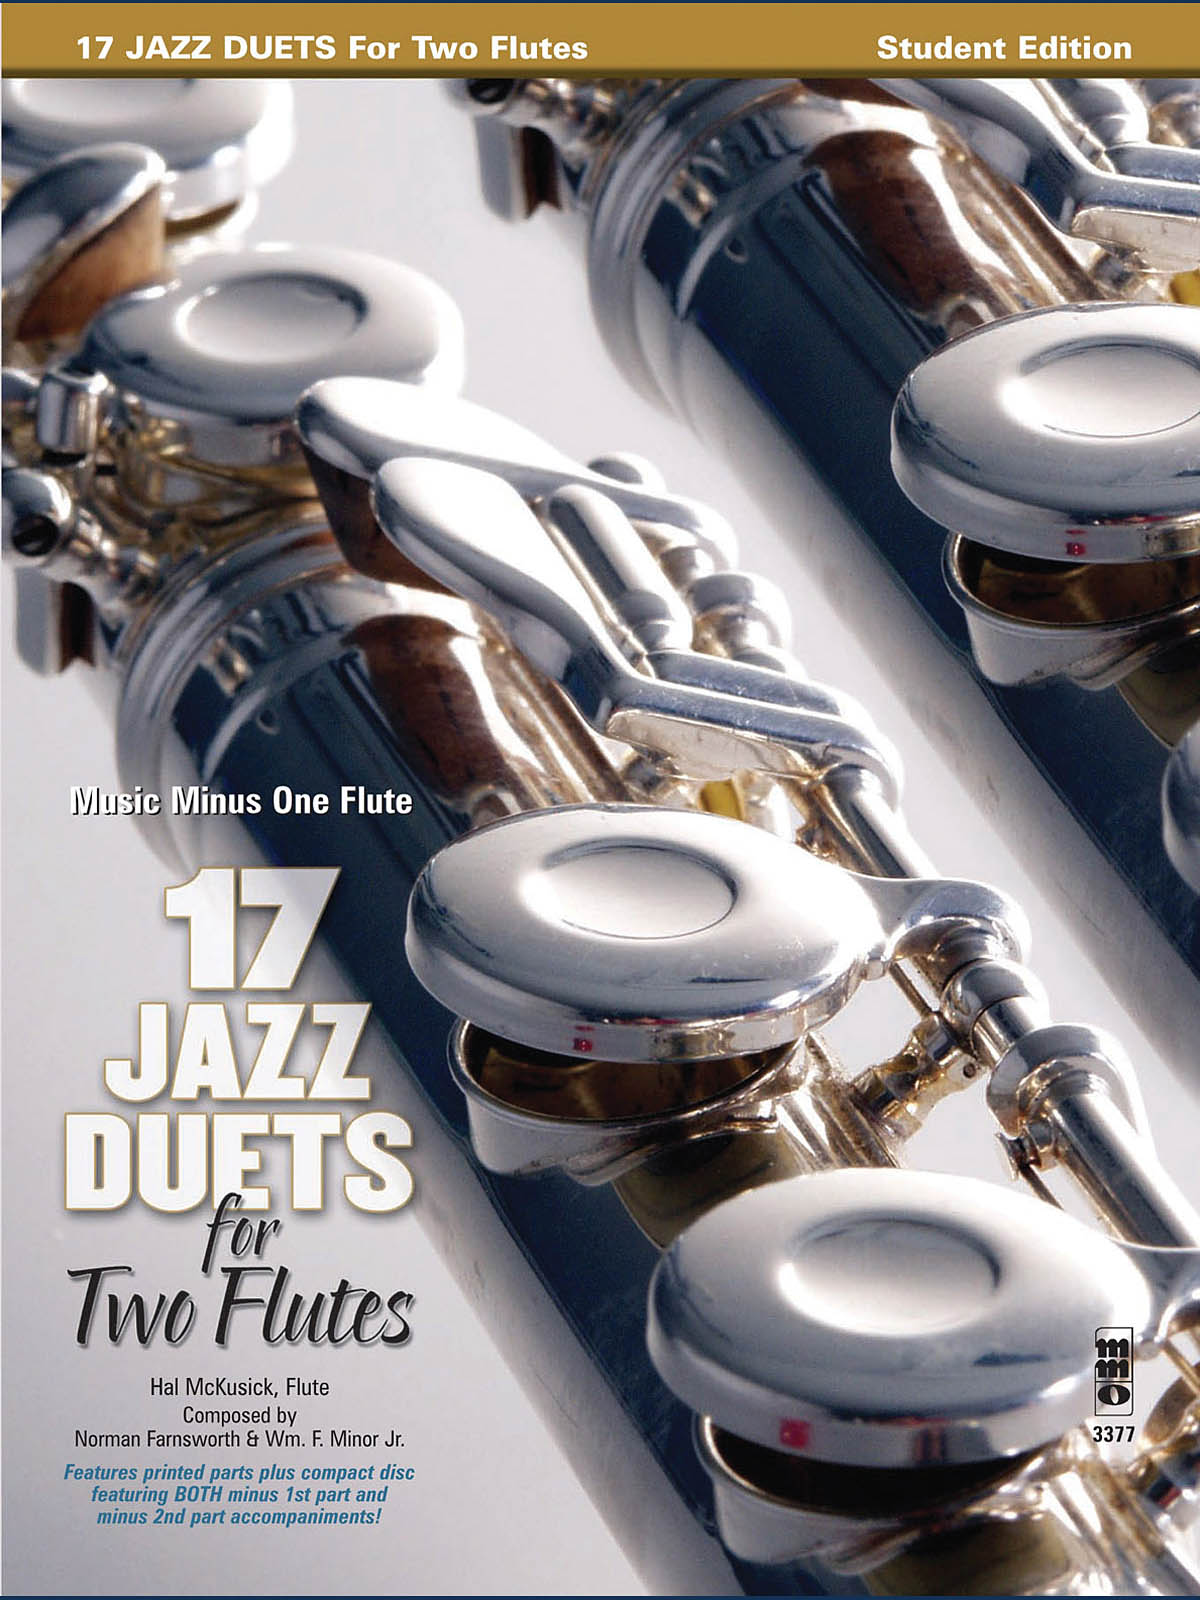 2 flutes. @Jazz Duets. Music Minus maker.